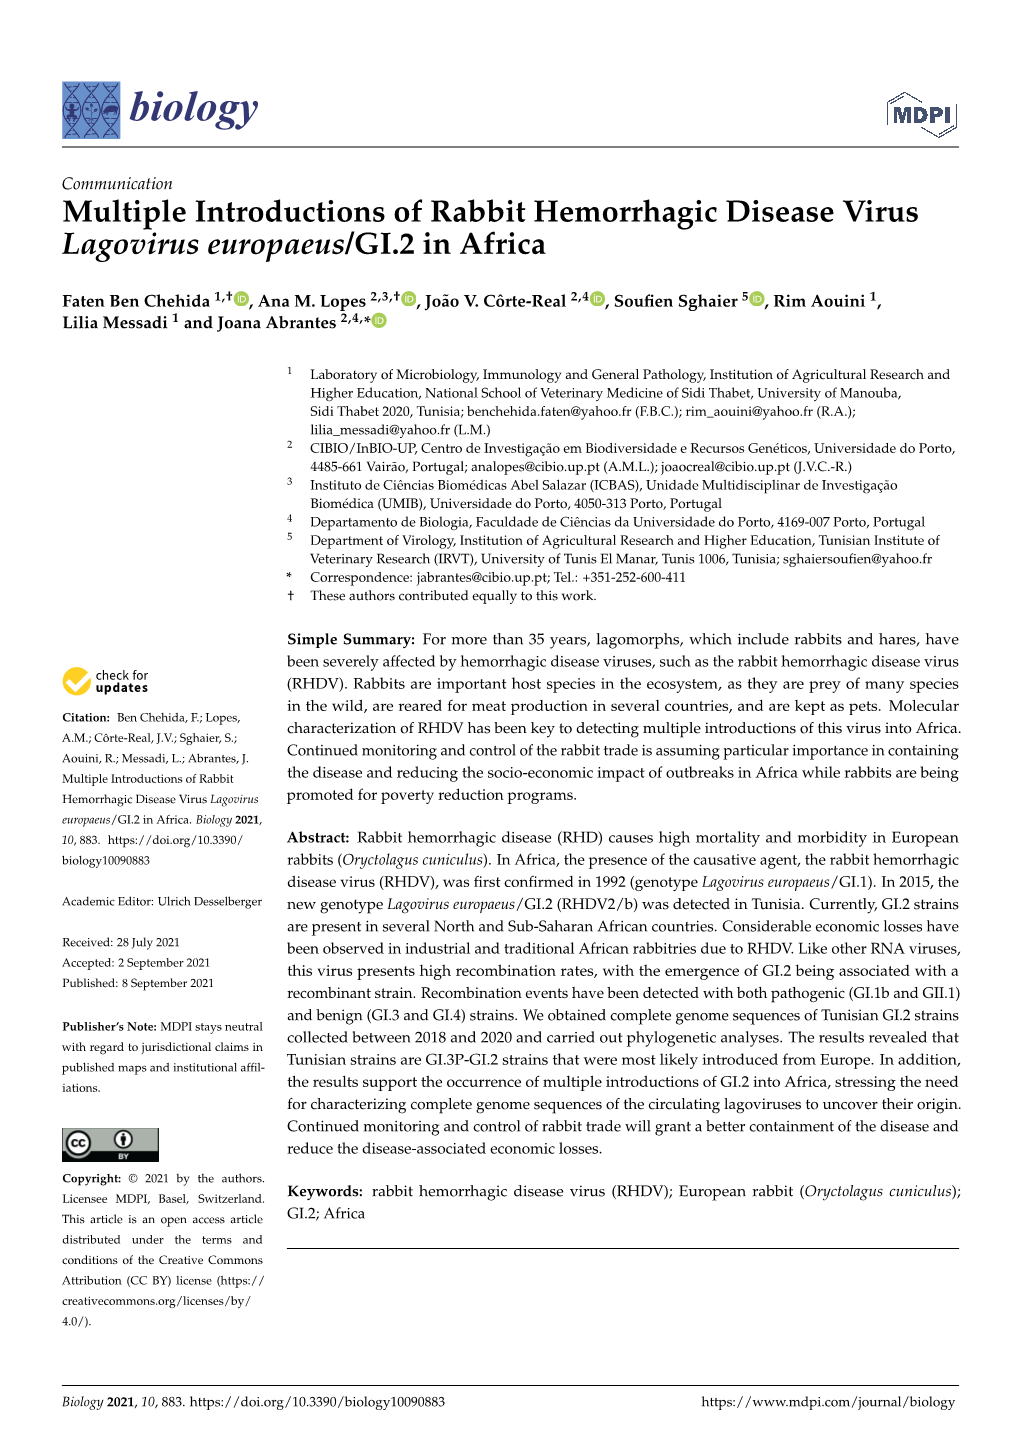 Multiple Introductions of Rabbit Hemorrhagic Disease Virus Lagovirus Europaeus/GI.2 in Africa